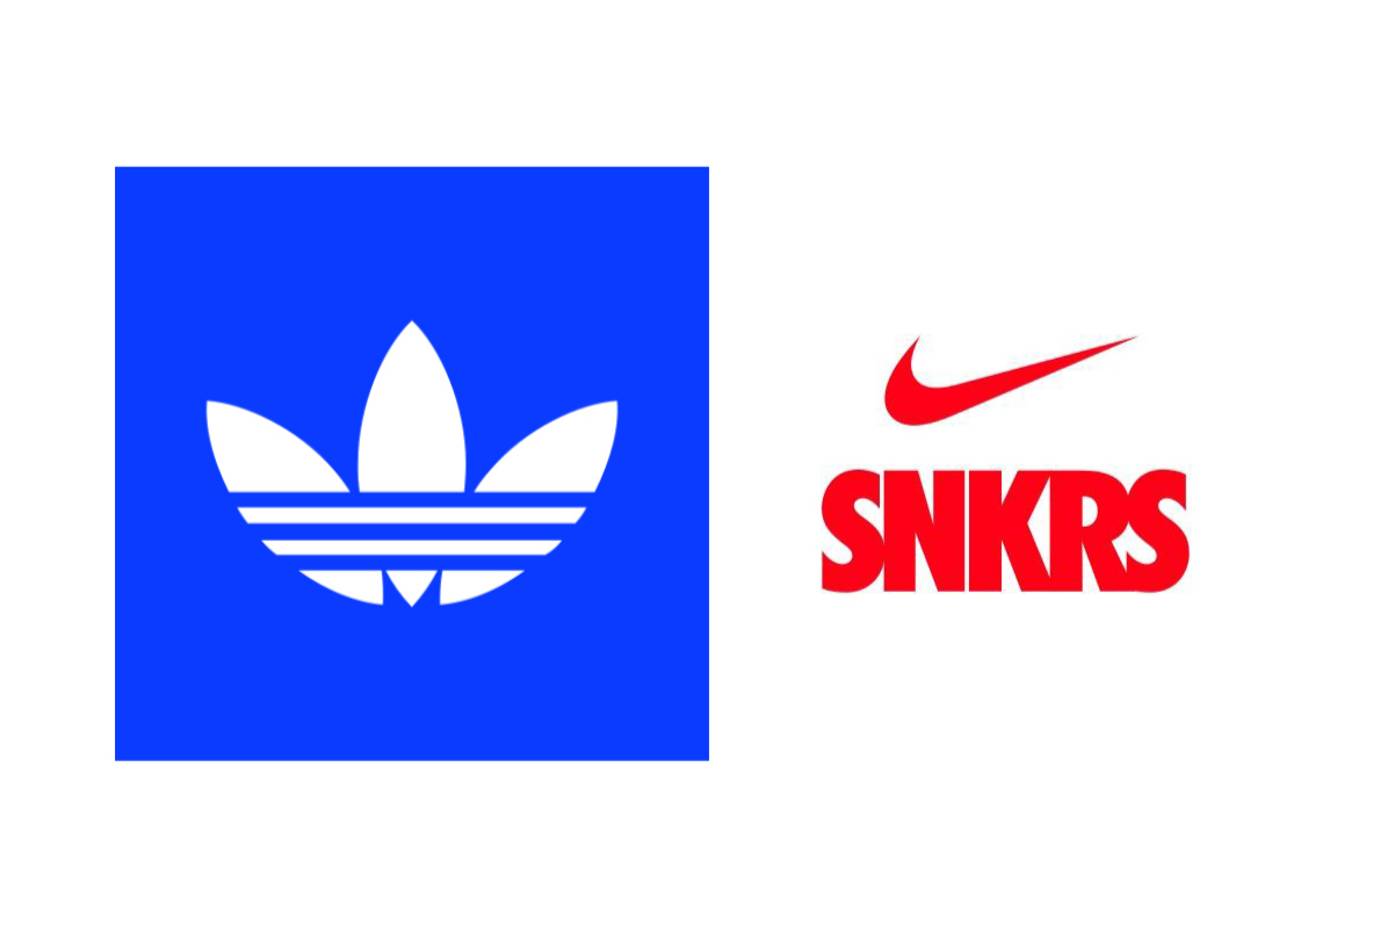 Deckers relaunch Ahnu as a “super sneaker brand”